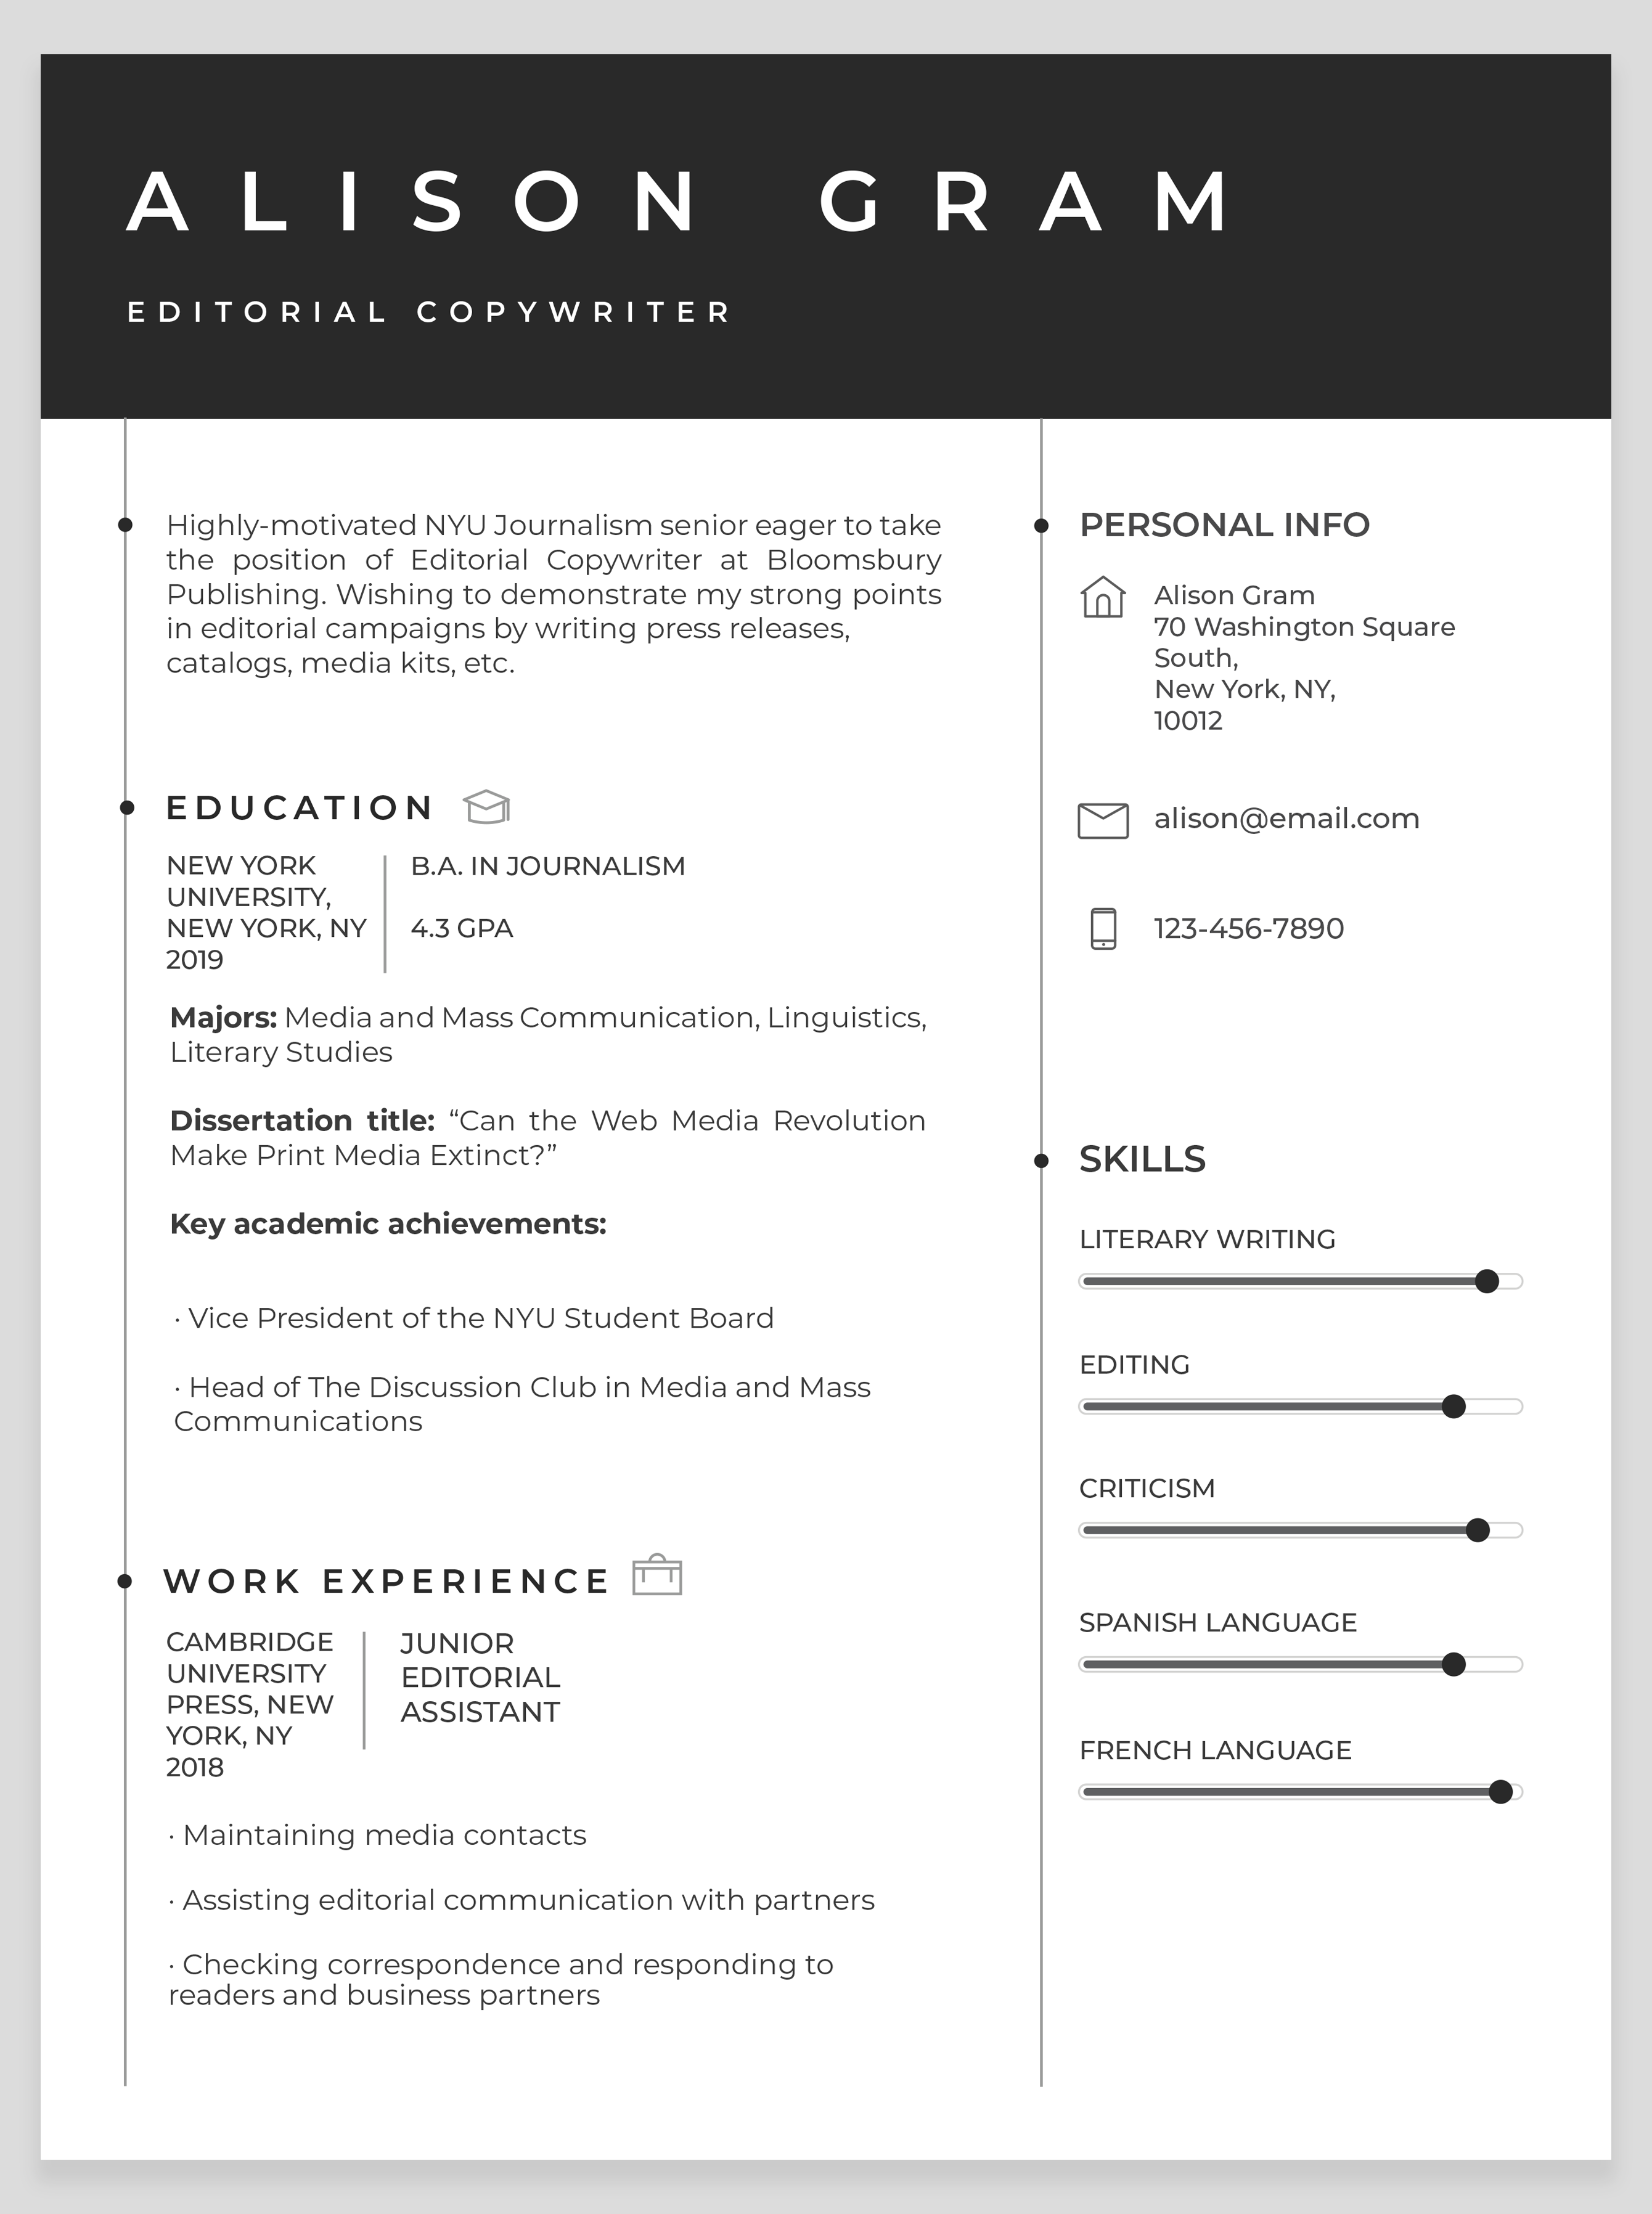 How to make a stunning resume [CV template inside] | CustomWritings.com